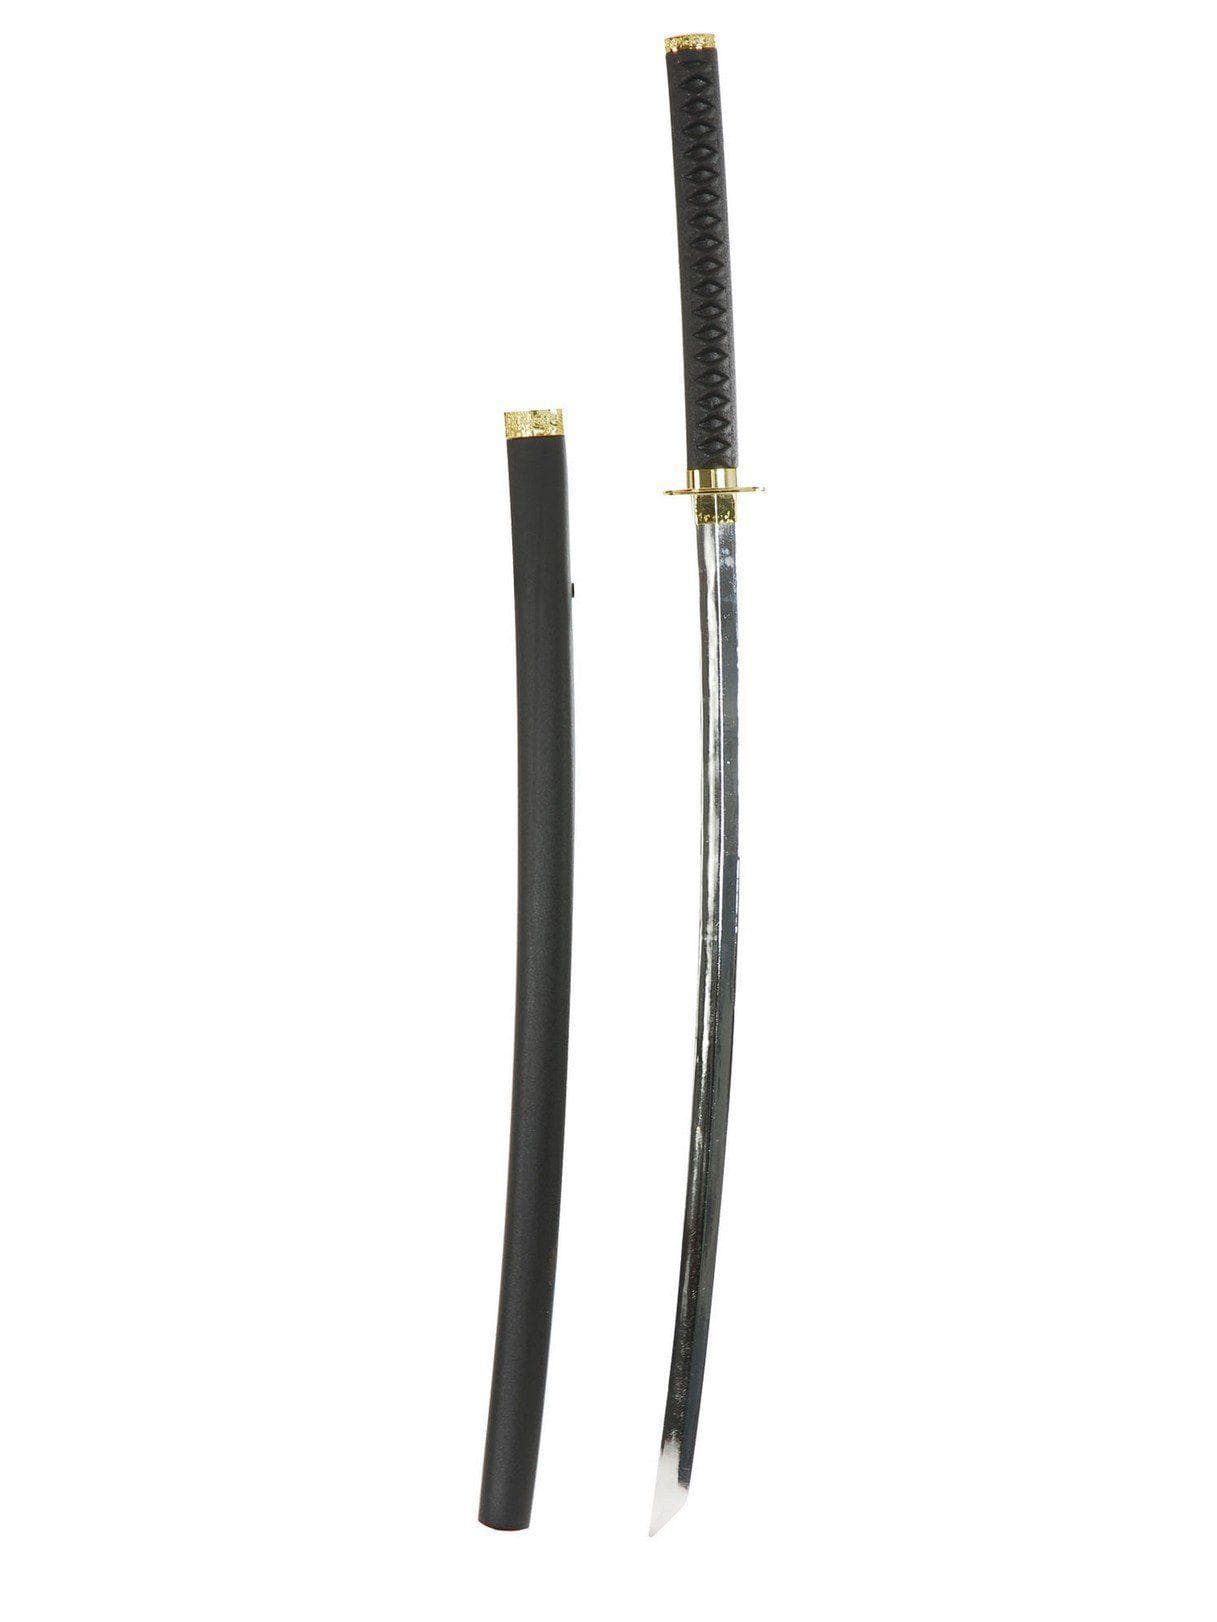 Adult 42-inch Katana Sword - costumes.com